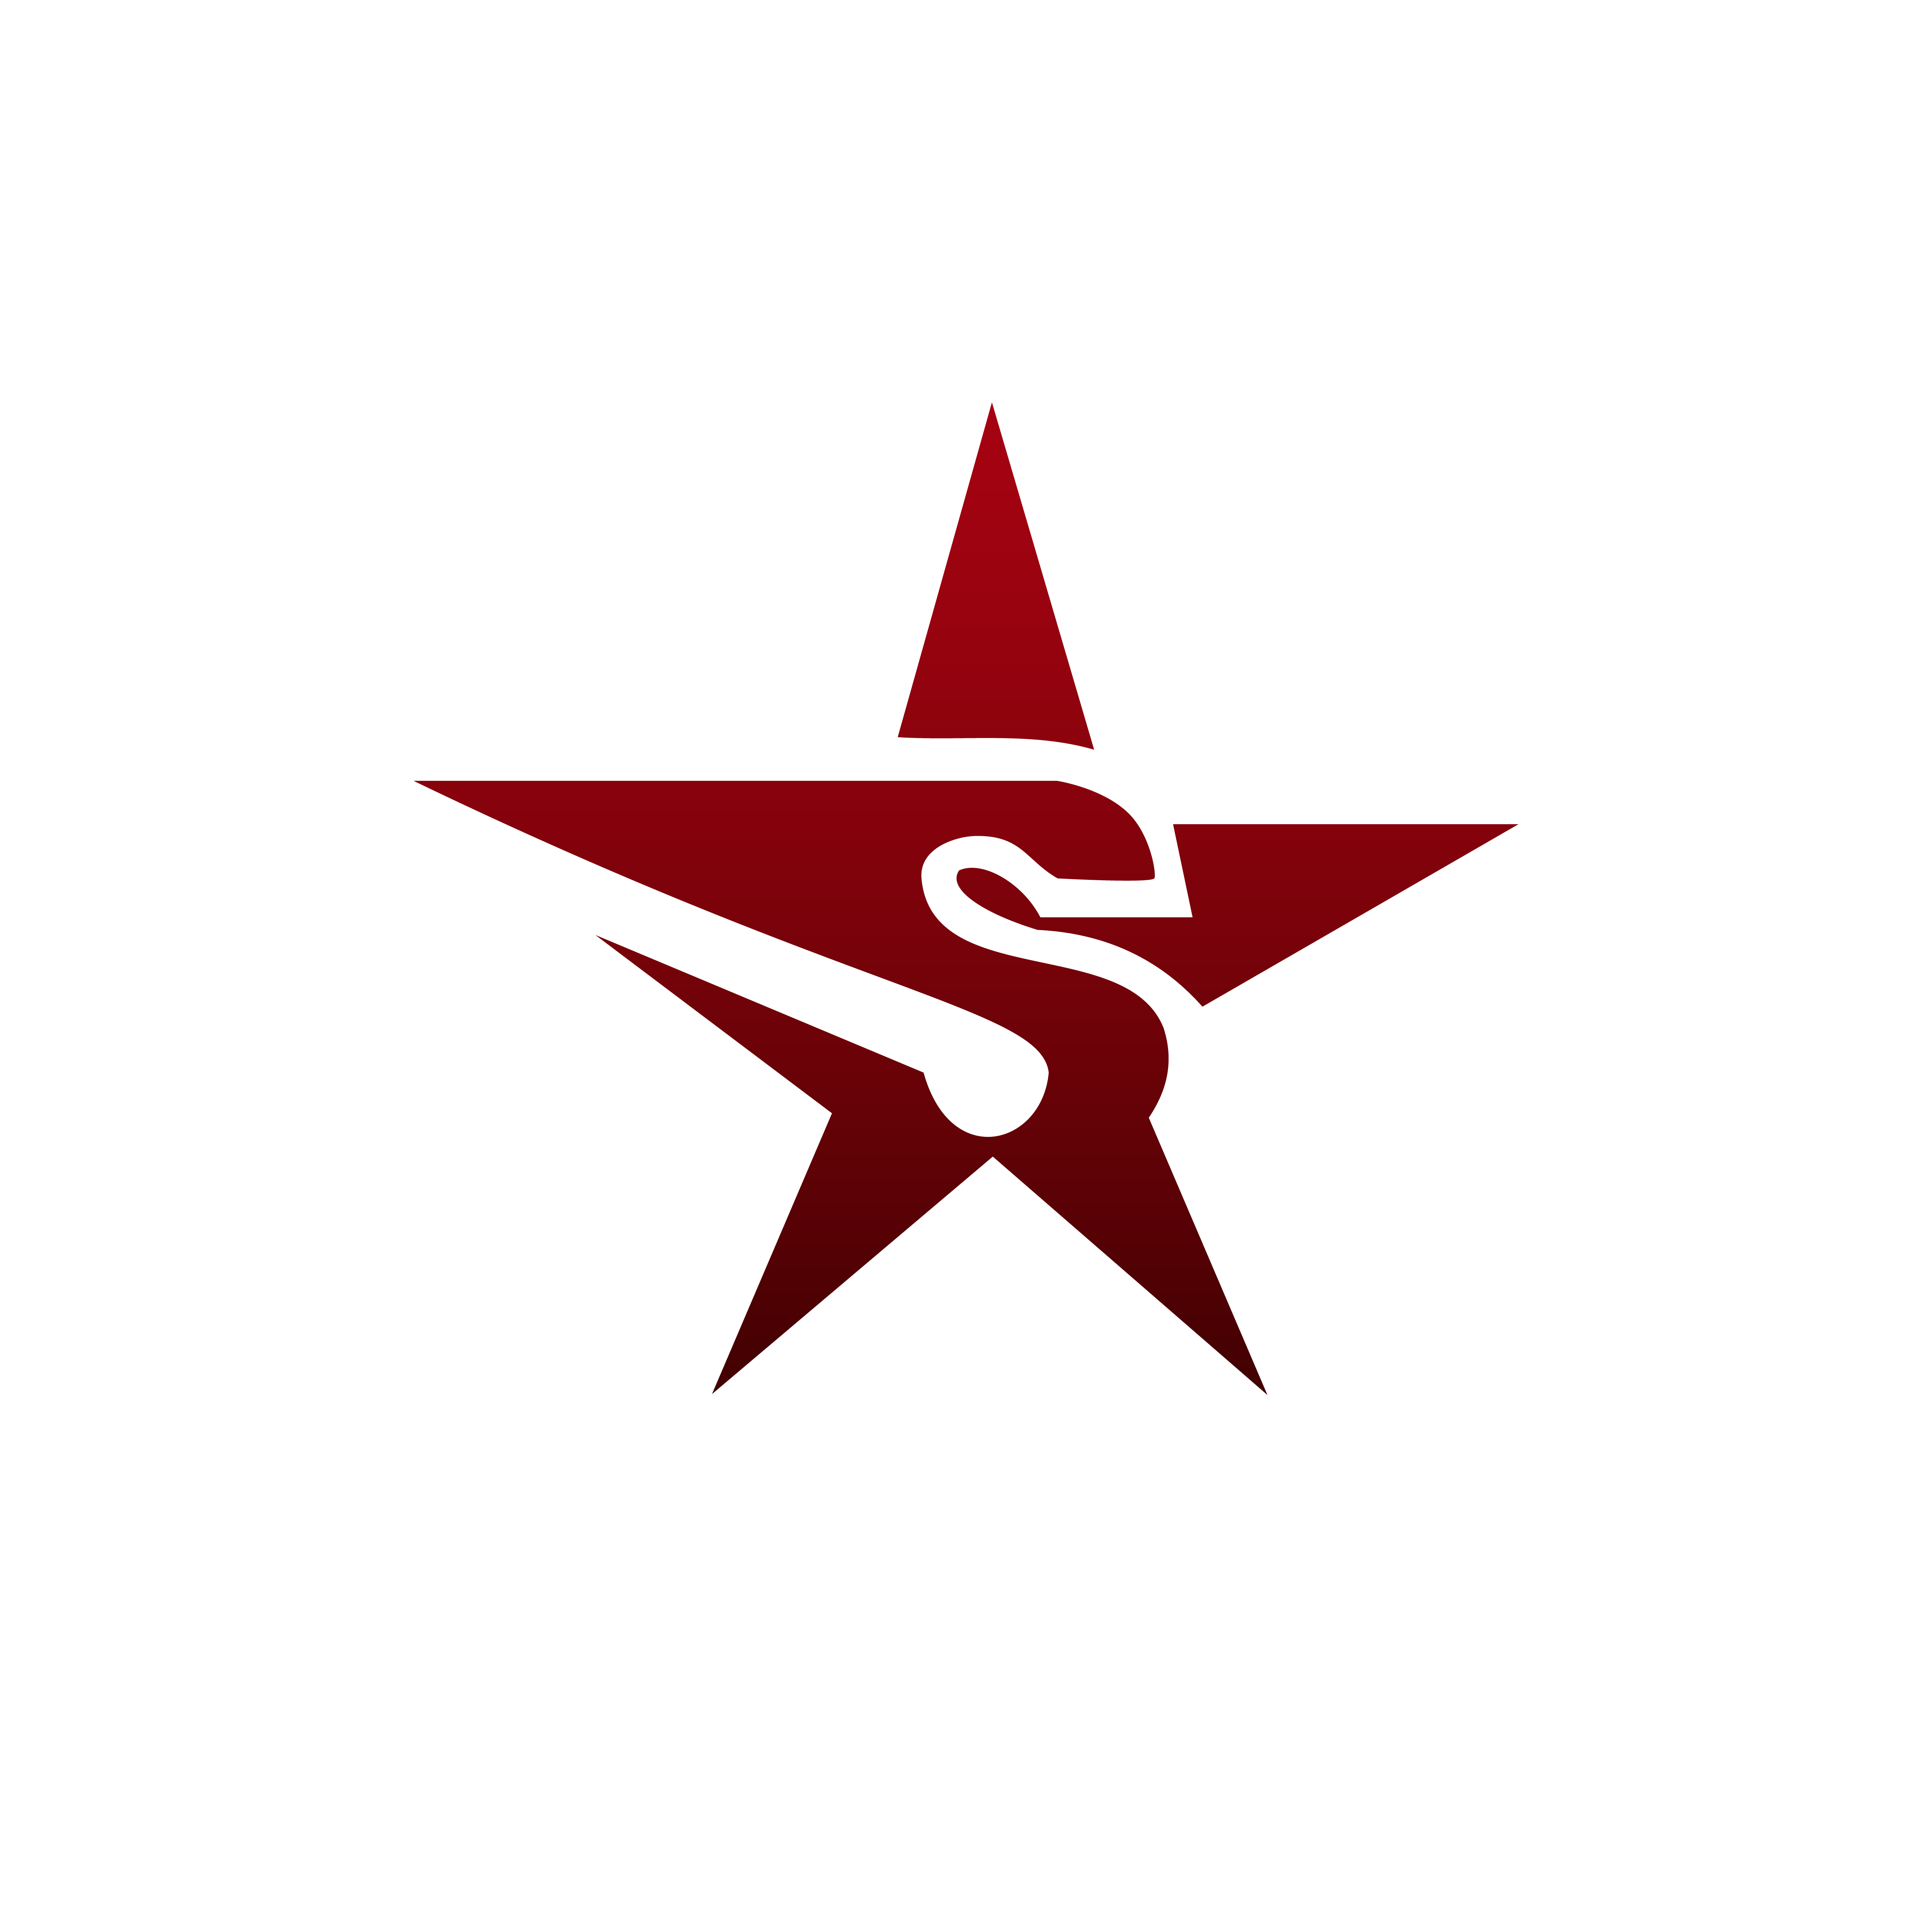 Letter S Star Logo Design Concept Template Download Free Vectors